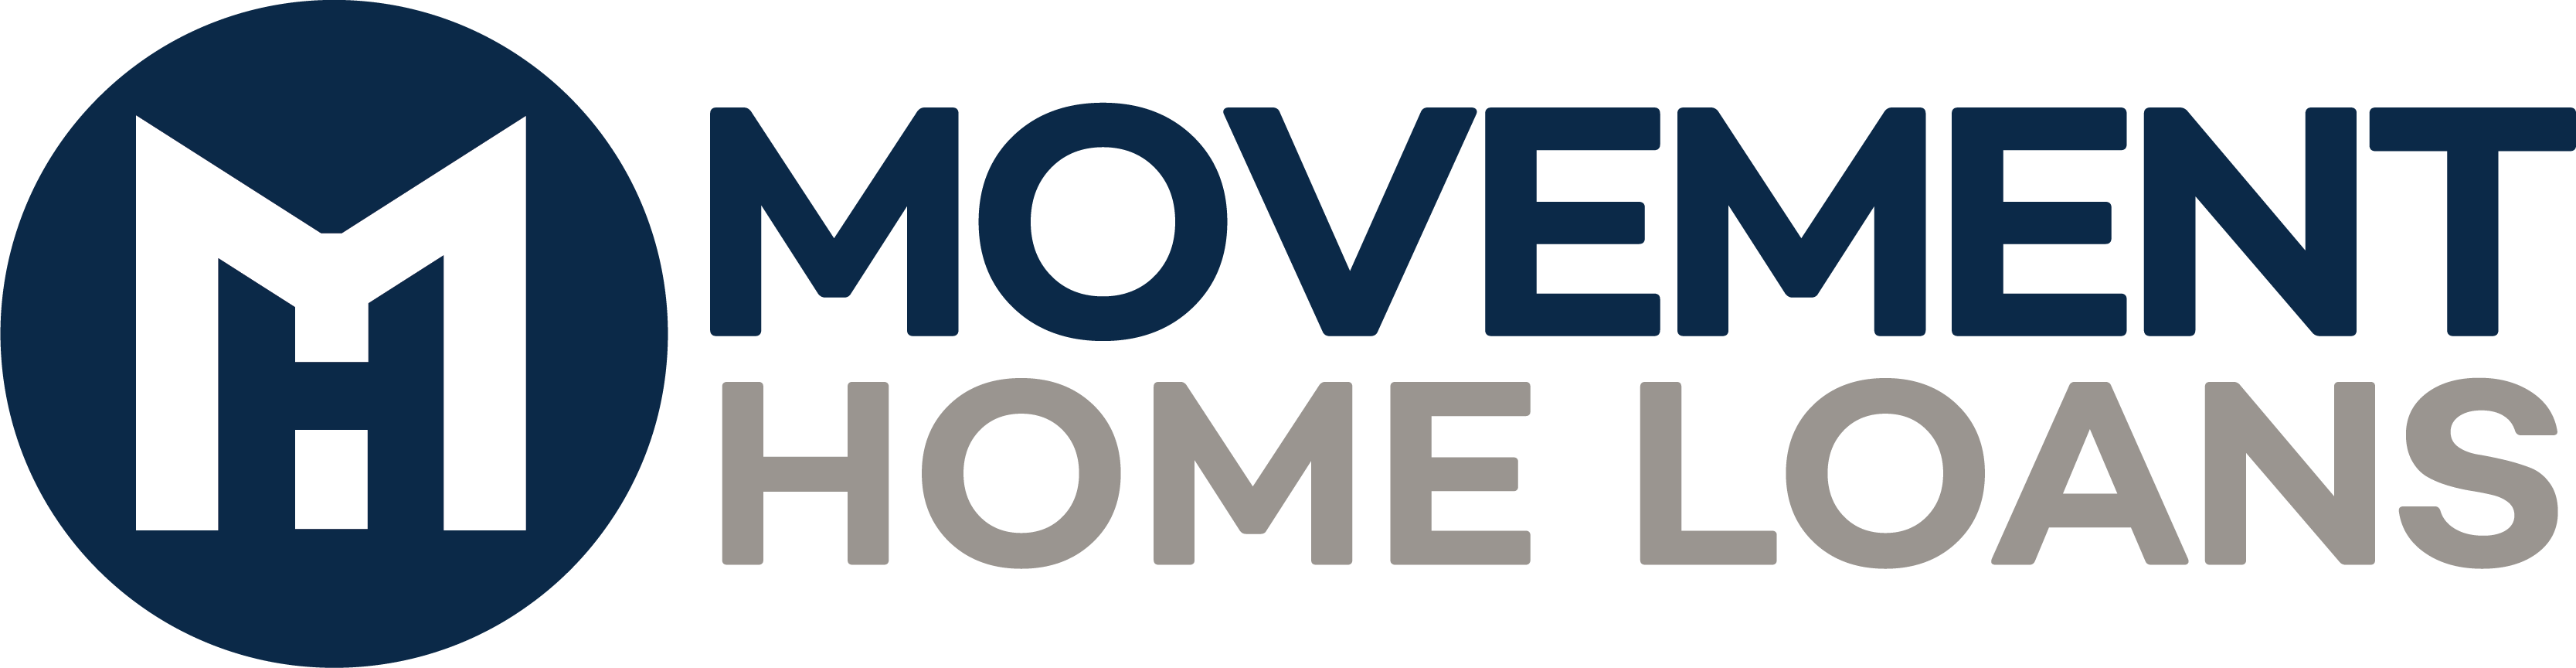 Movement Home Loans